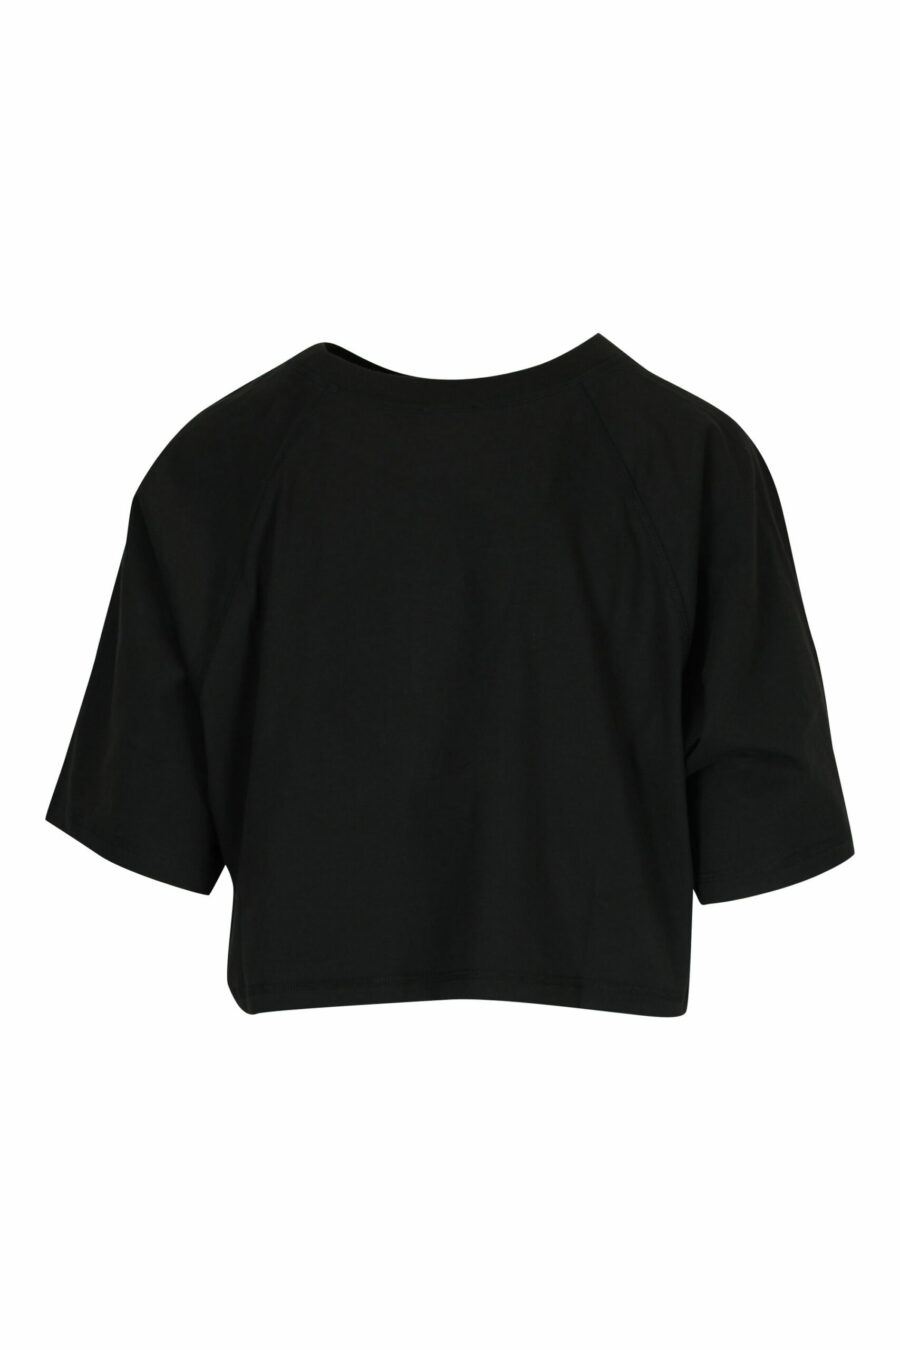 Schwarzes T-Shirt mit schwarzem "boke flower" Maxilogo - 3612230587045 1 skaliert